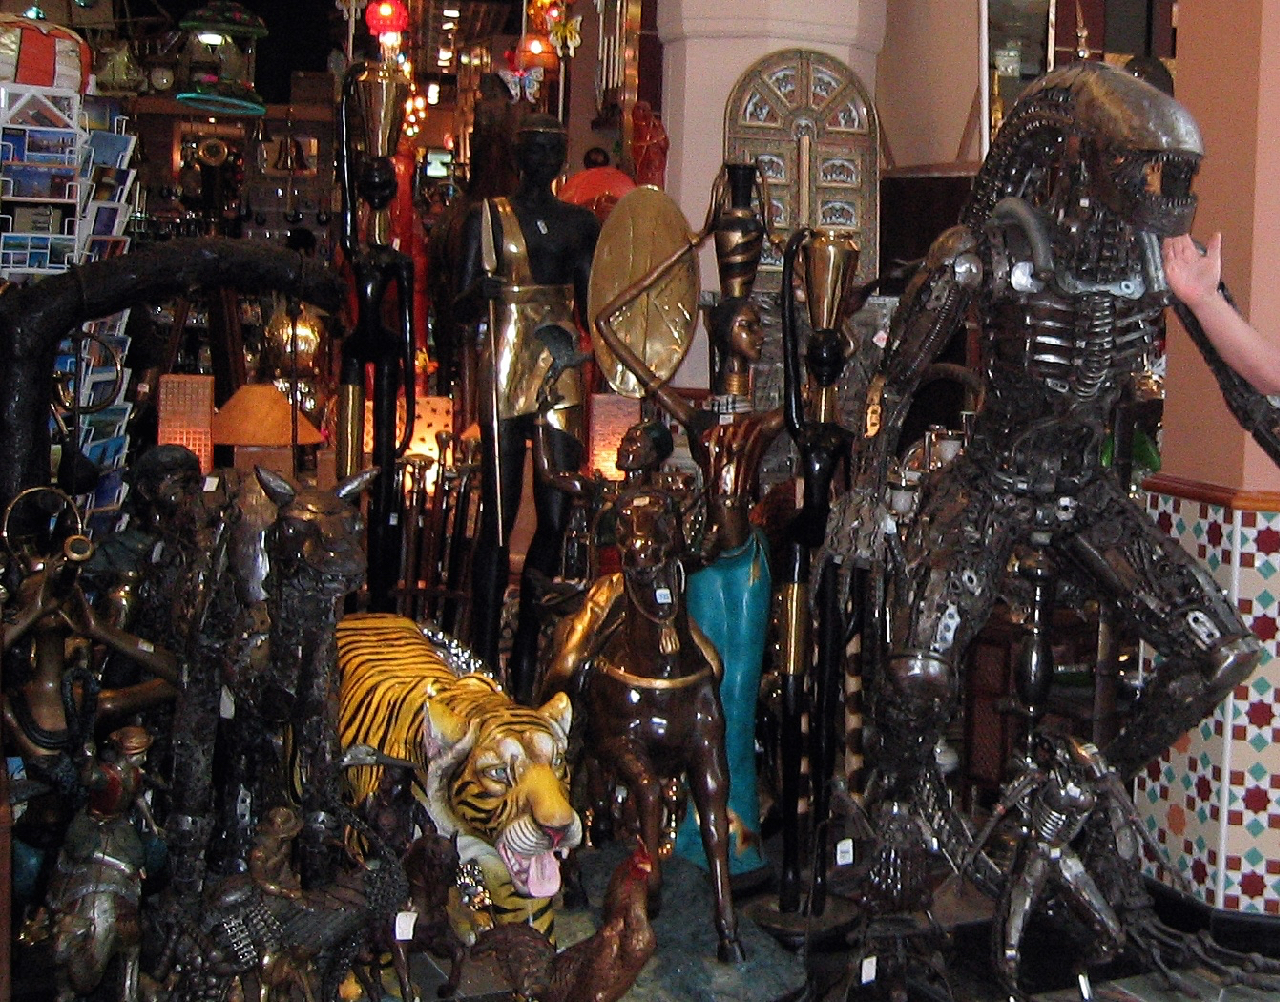 Metal statues